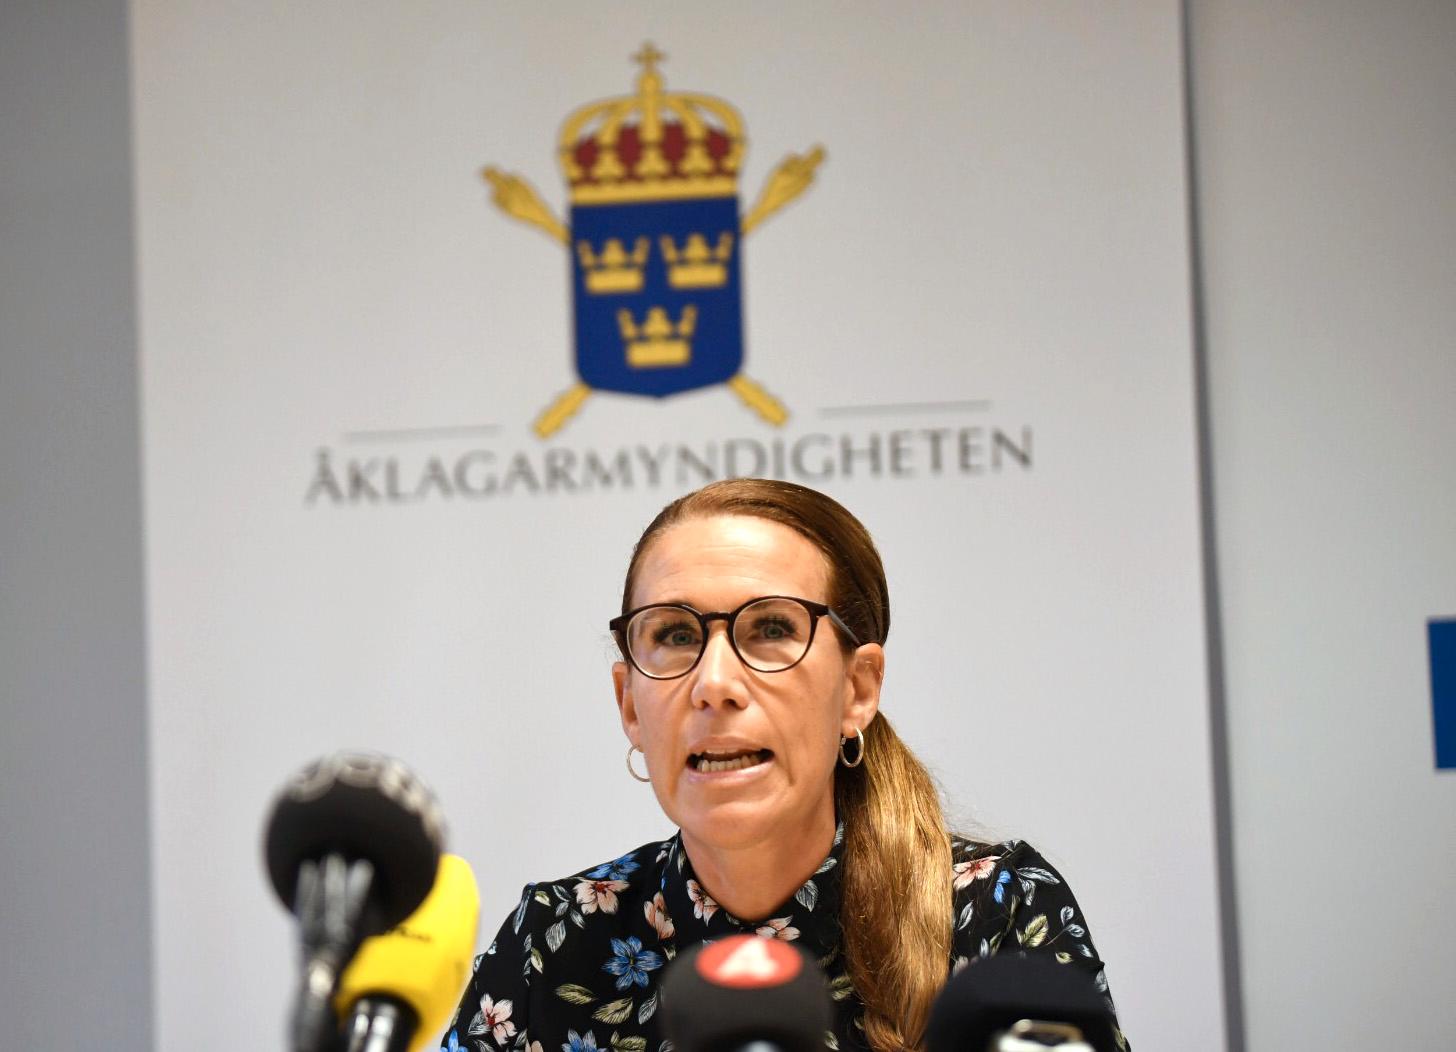 Åklagaren Linda Schön.